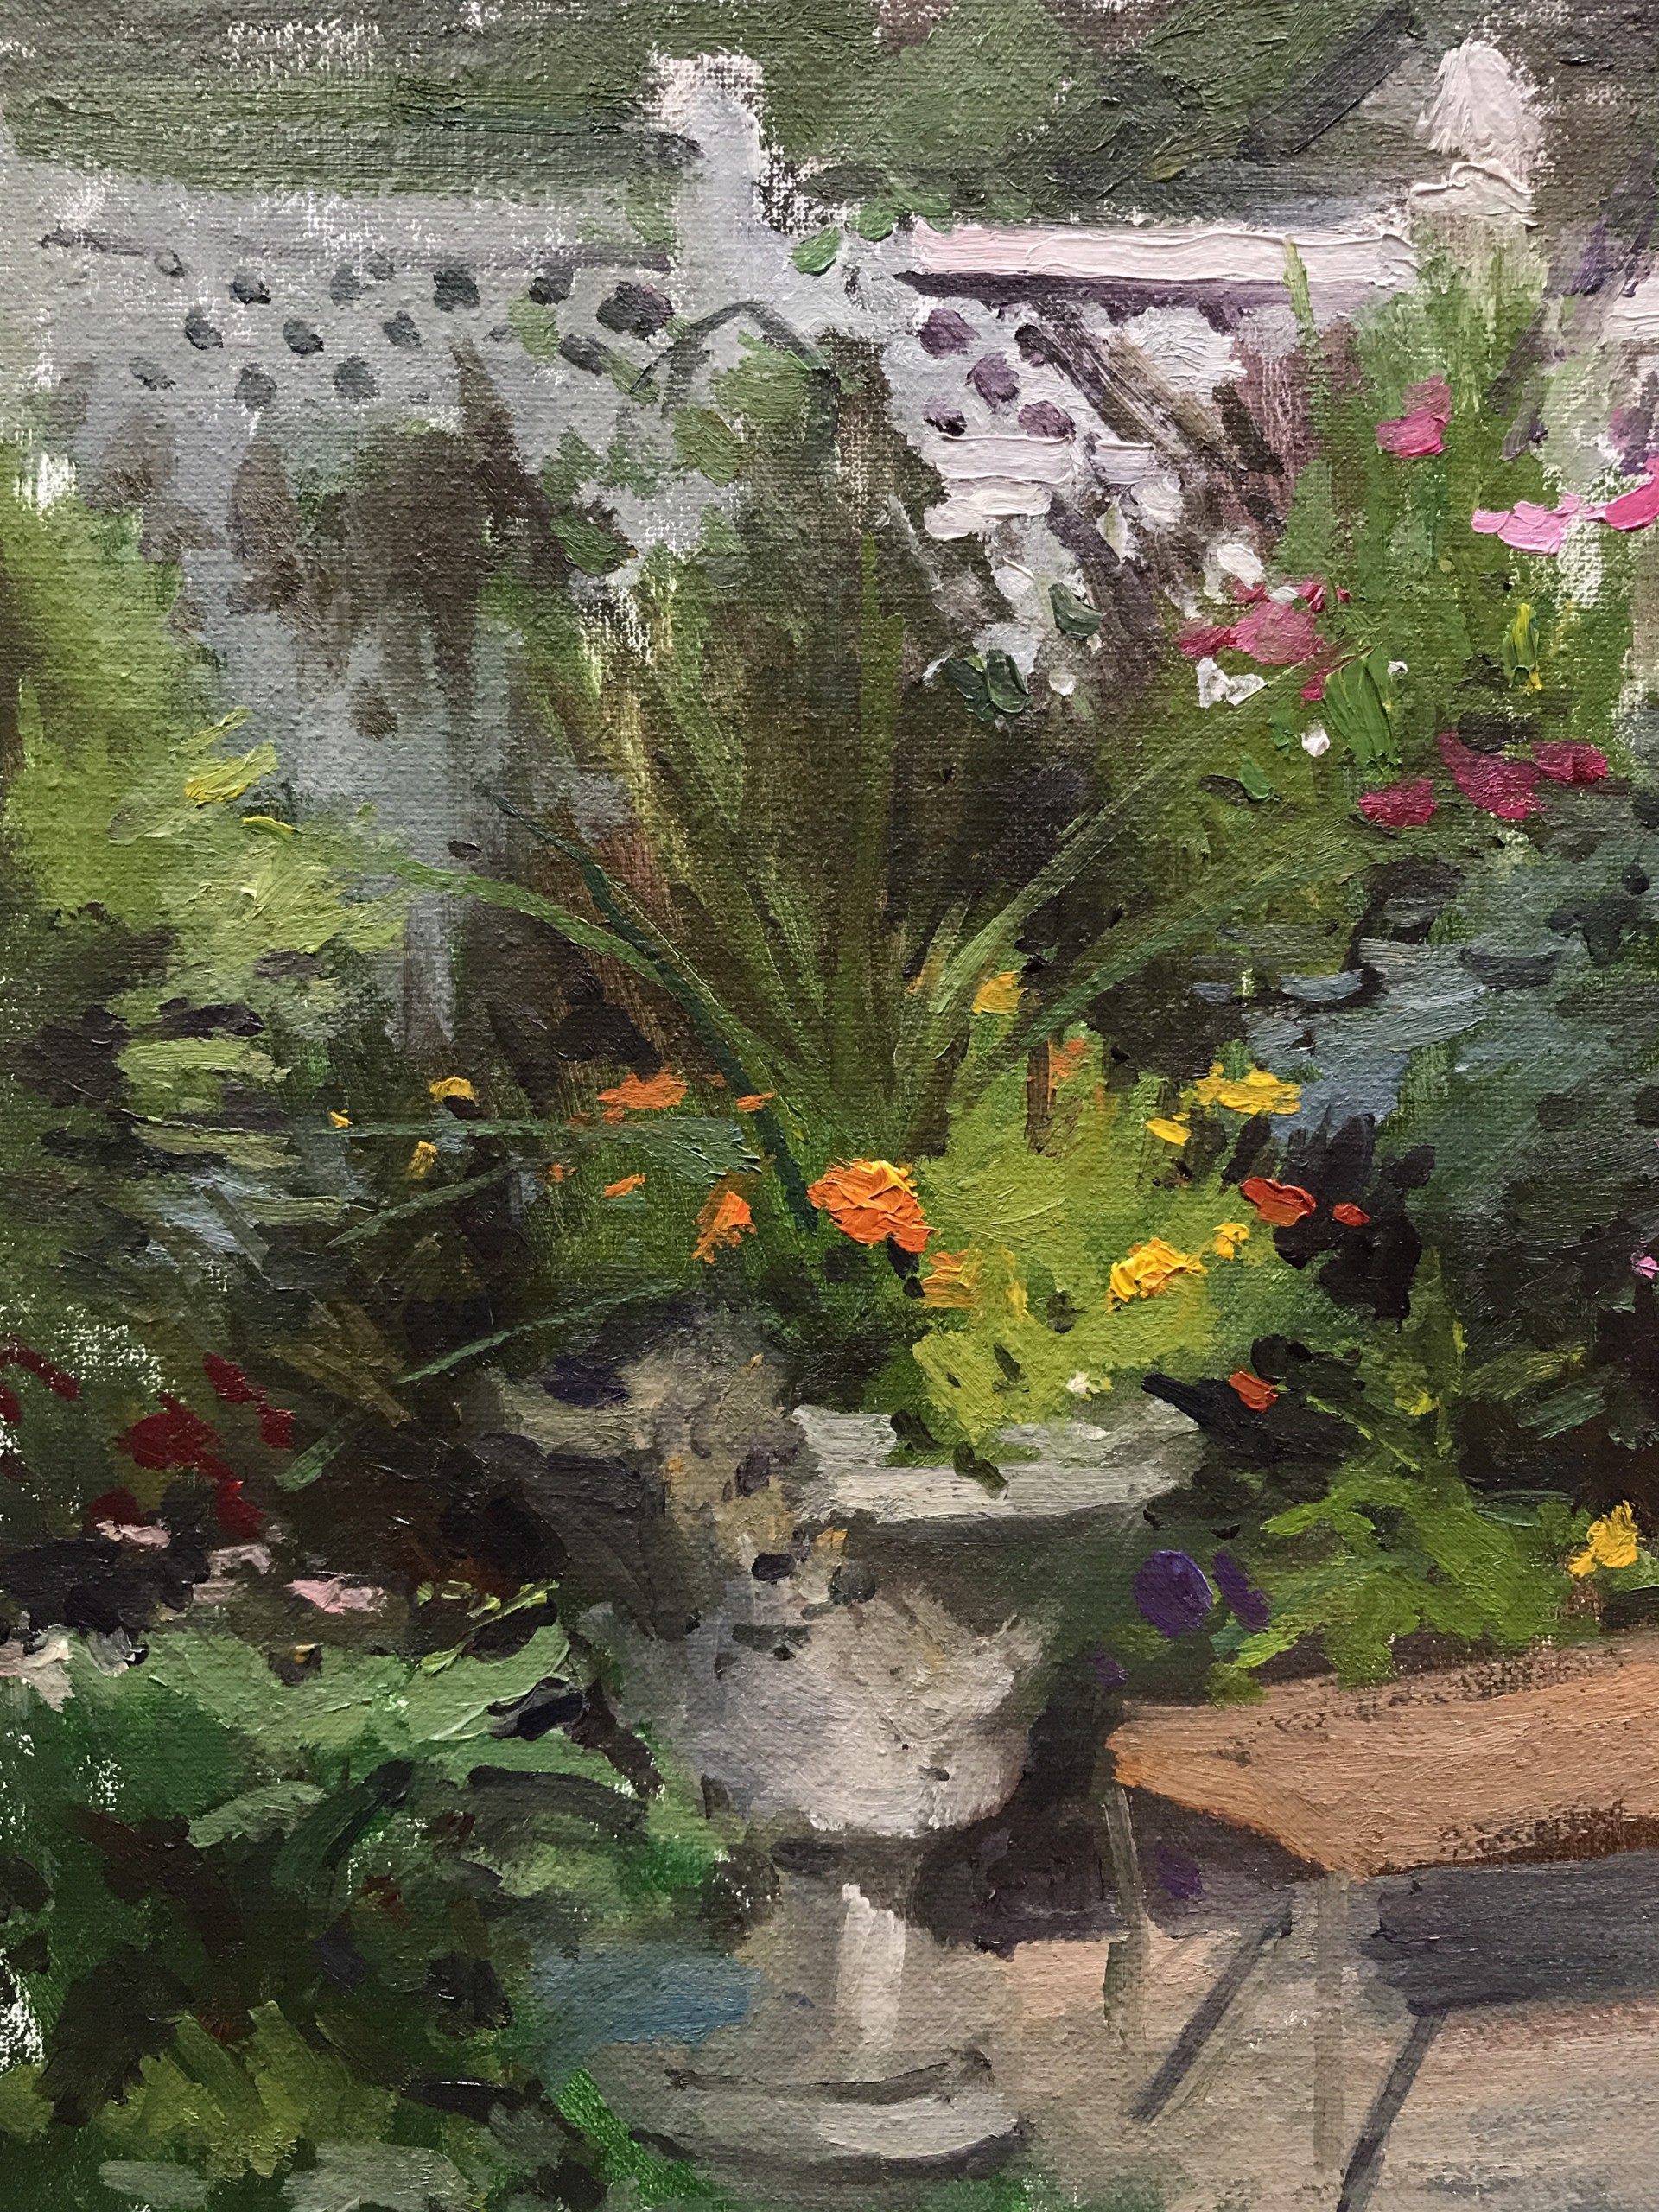 "In the Garden" original oil painting by Joe Gyurscak